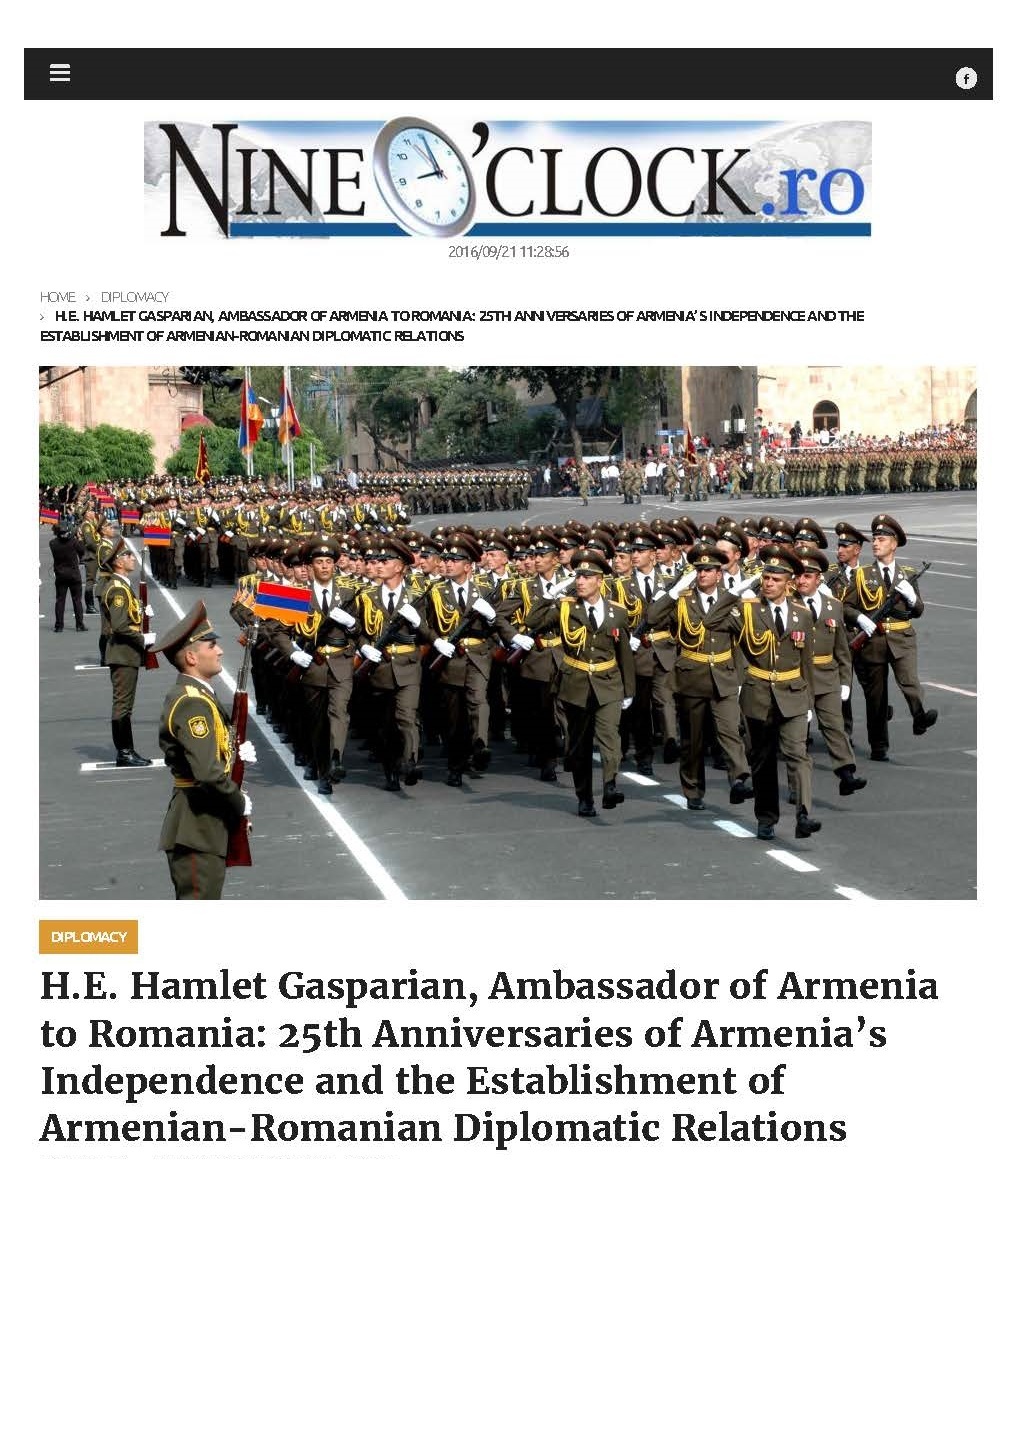 H.E. Hamlet Gasparian, Ambassador of Armenia to Romania: 25th Anniversaries of Armenia’s Independence and the Establishment of Armenian-Romanian Diplomatic Relations